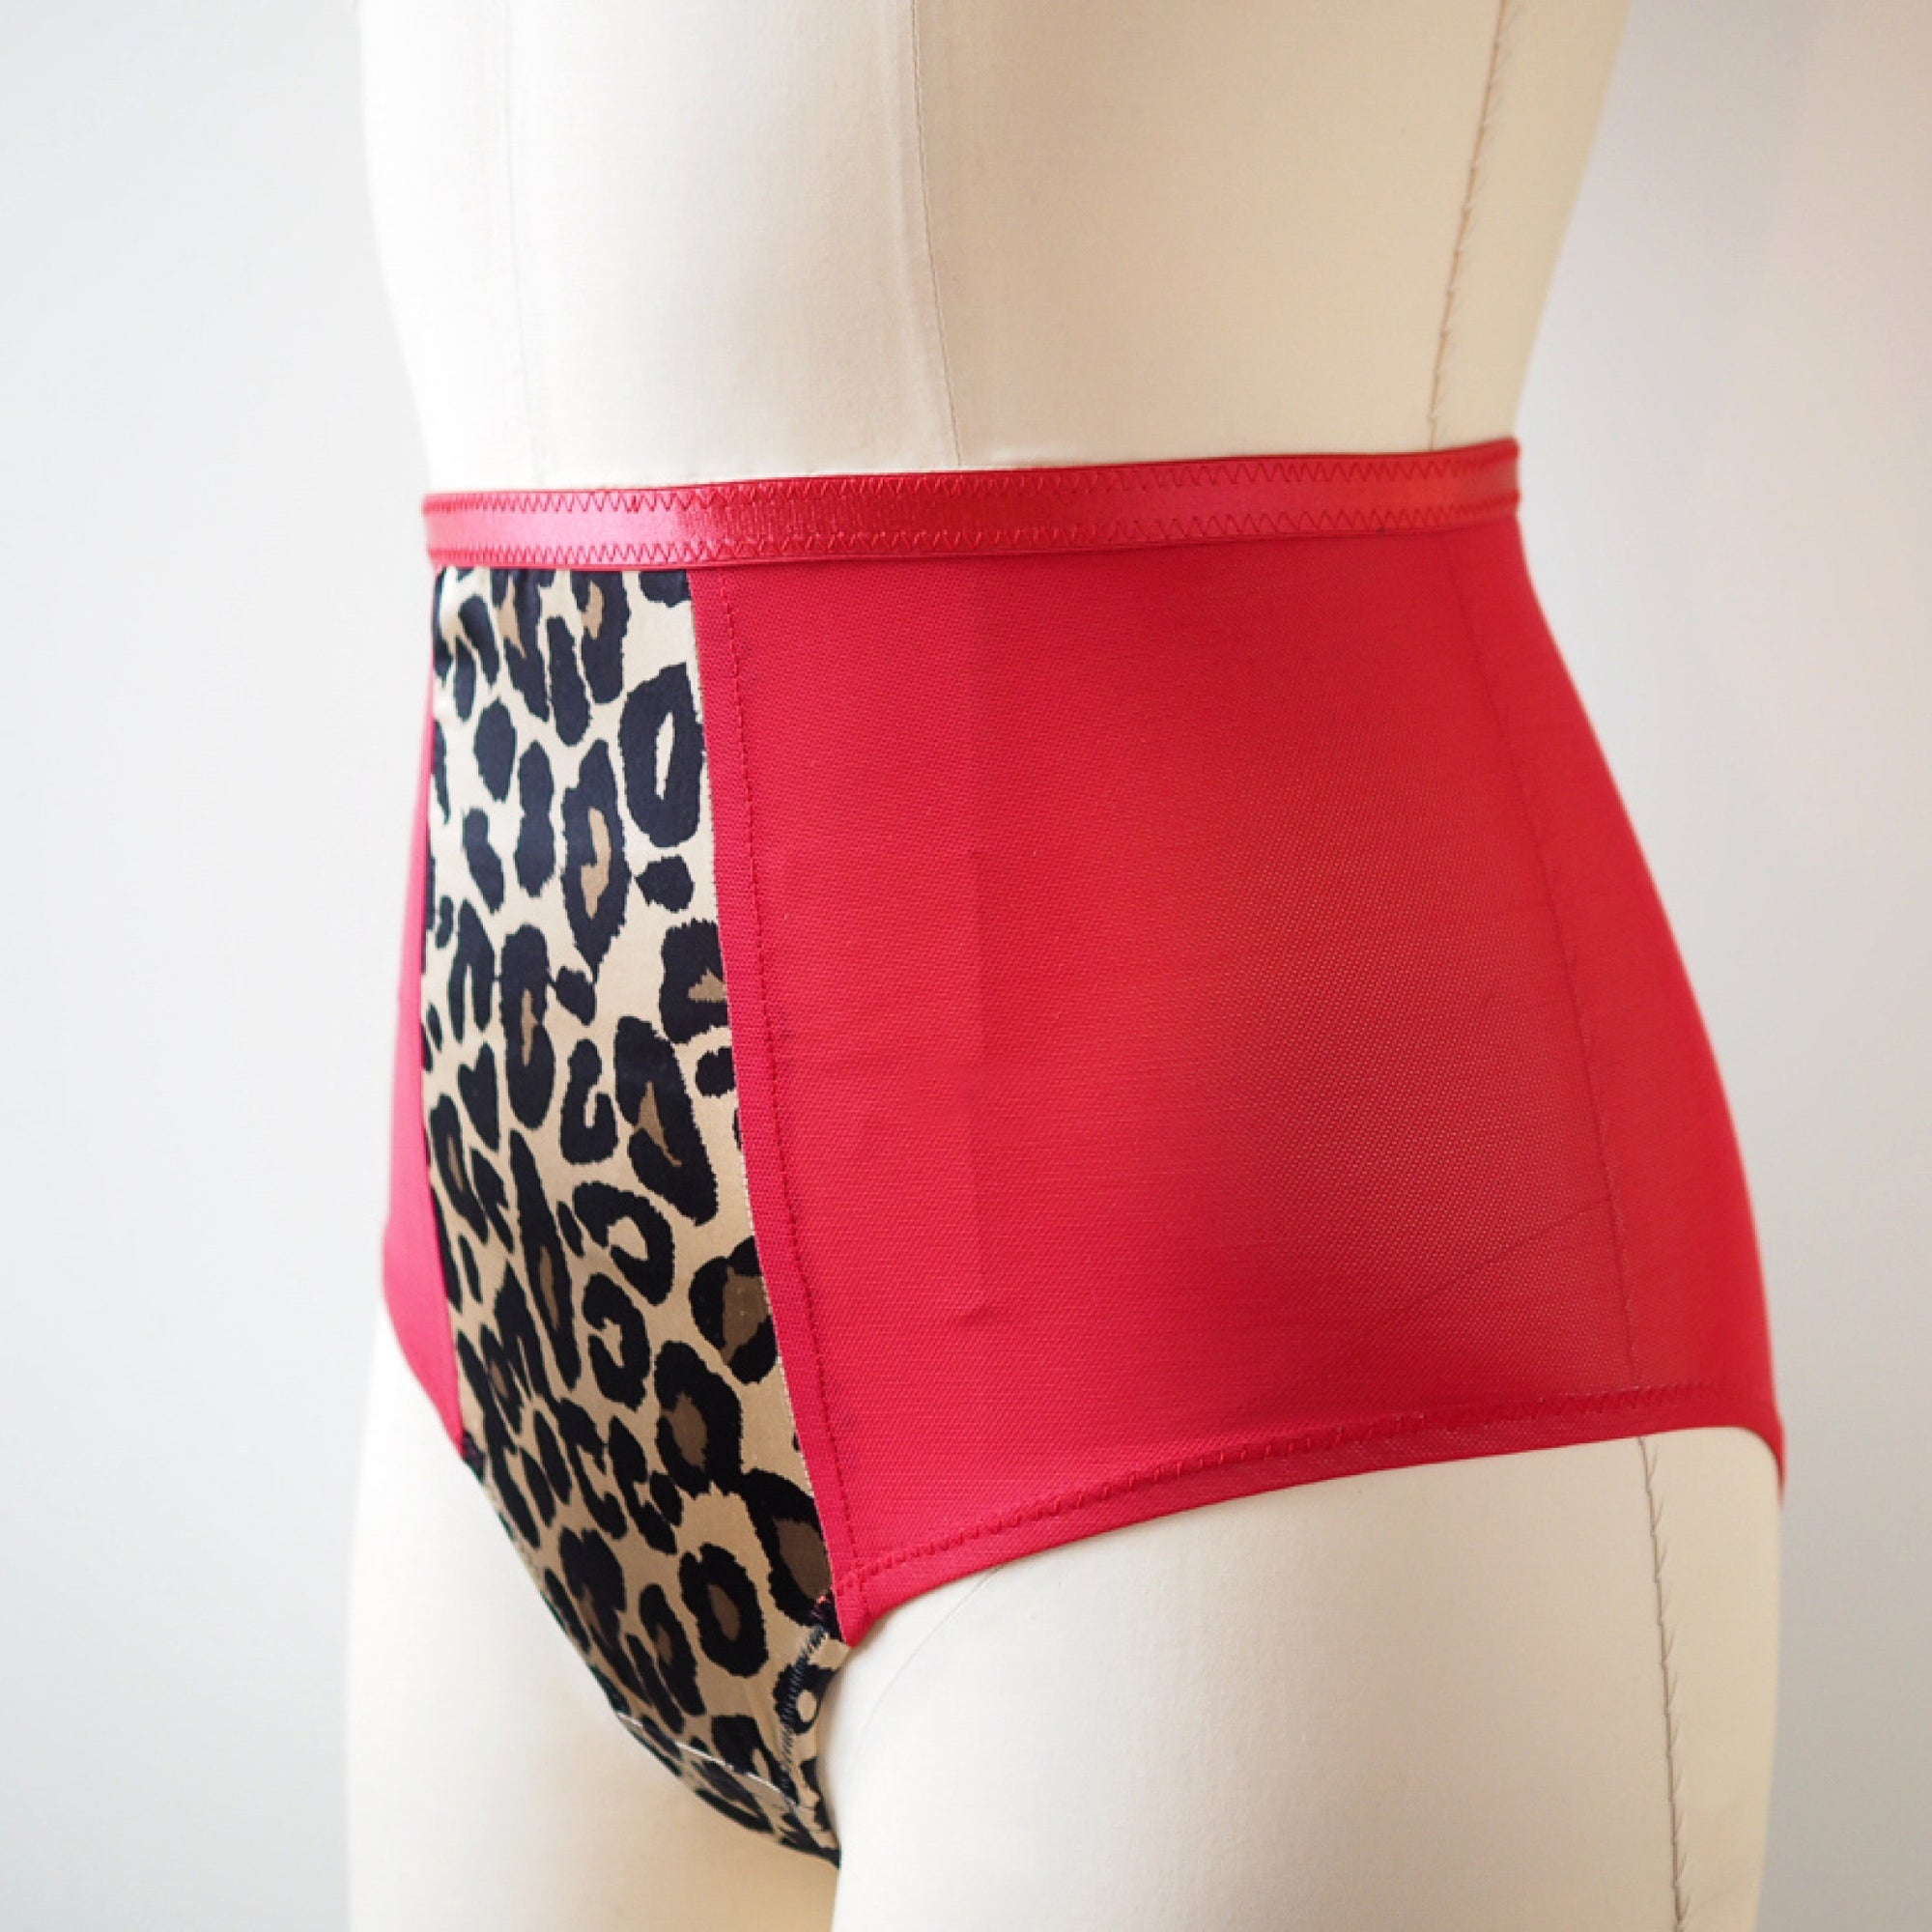 Panties pattern, high waist thong, easy pattern, PDF + instruction, S / M /  L